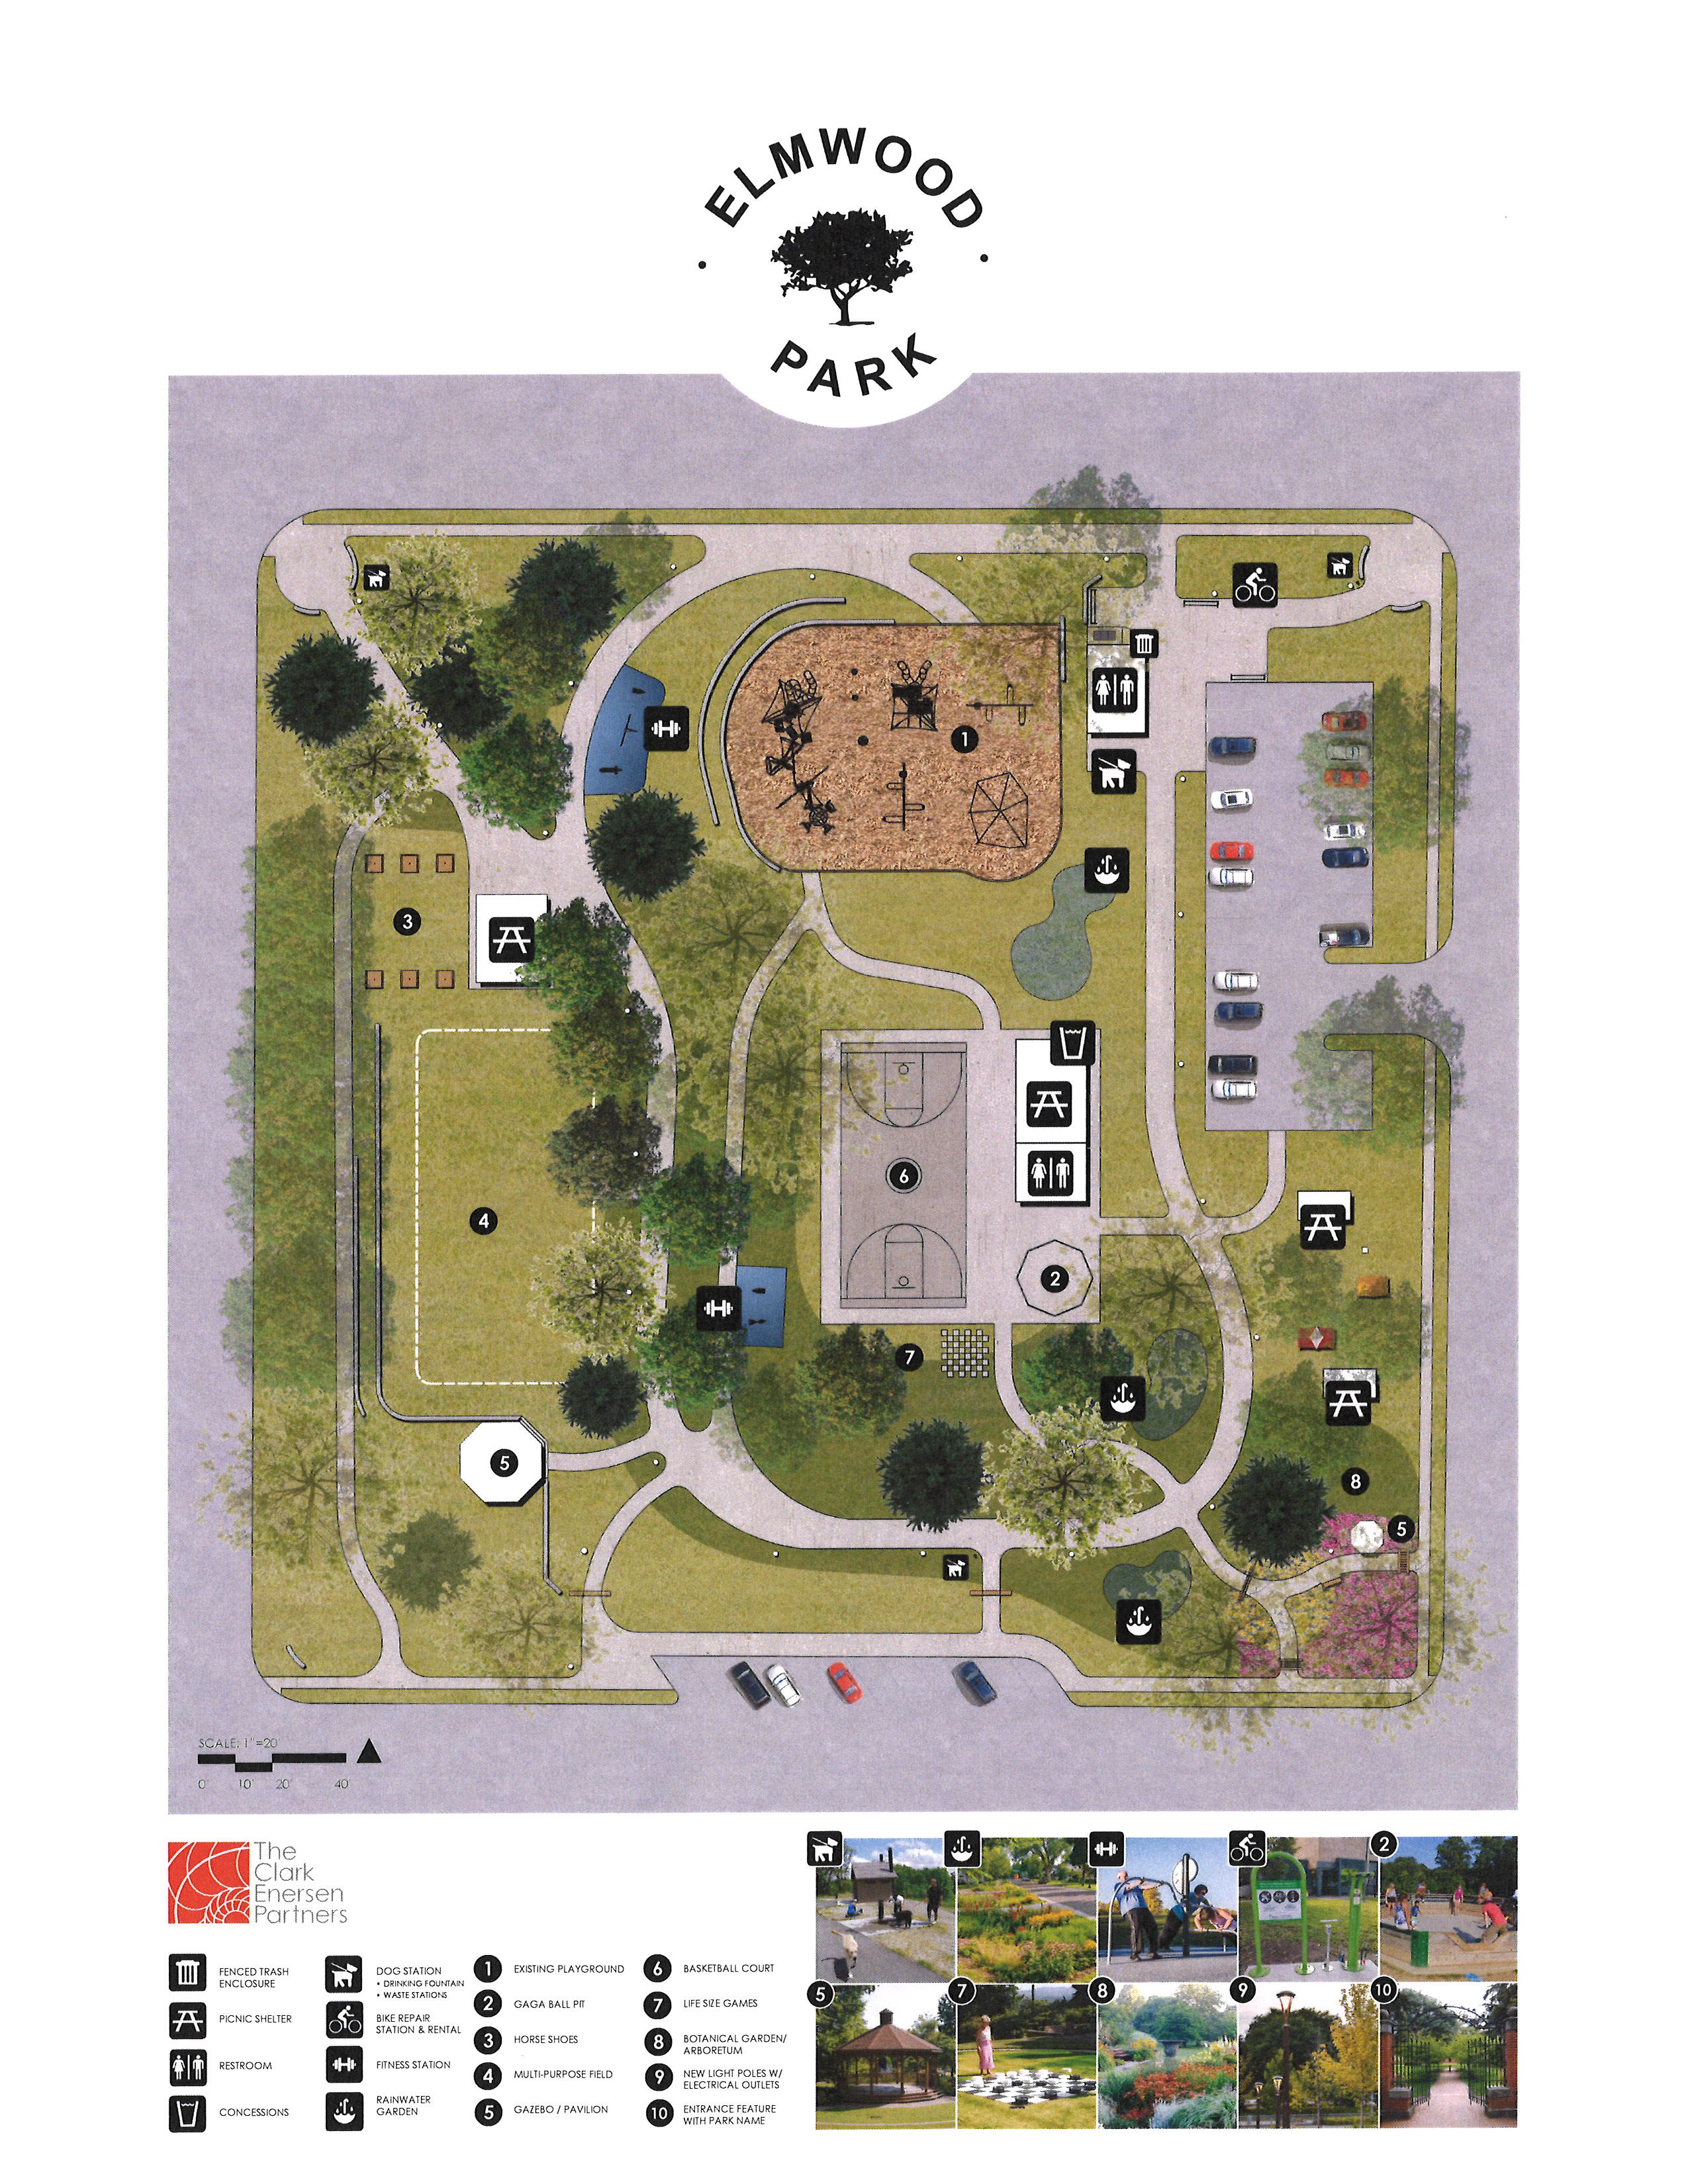 2018 Final Plan for Elmwood BSA Park from Clark Enerson copy